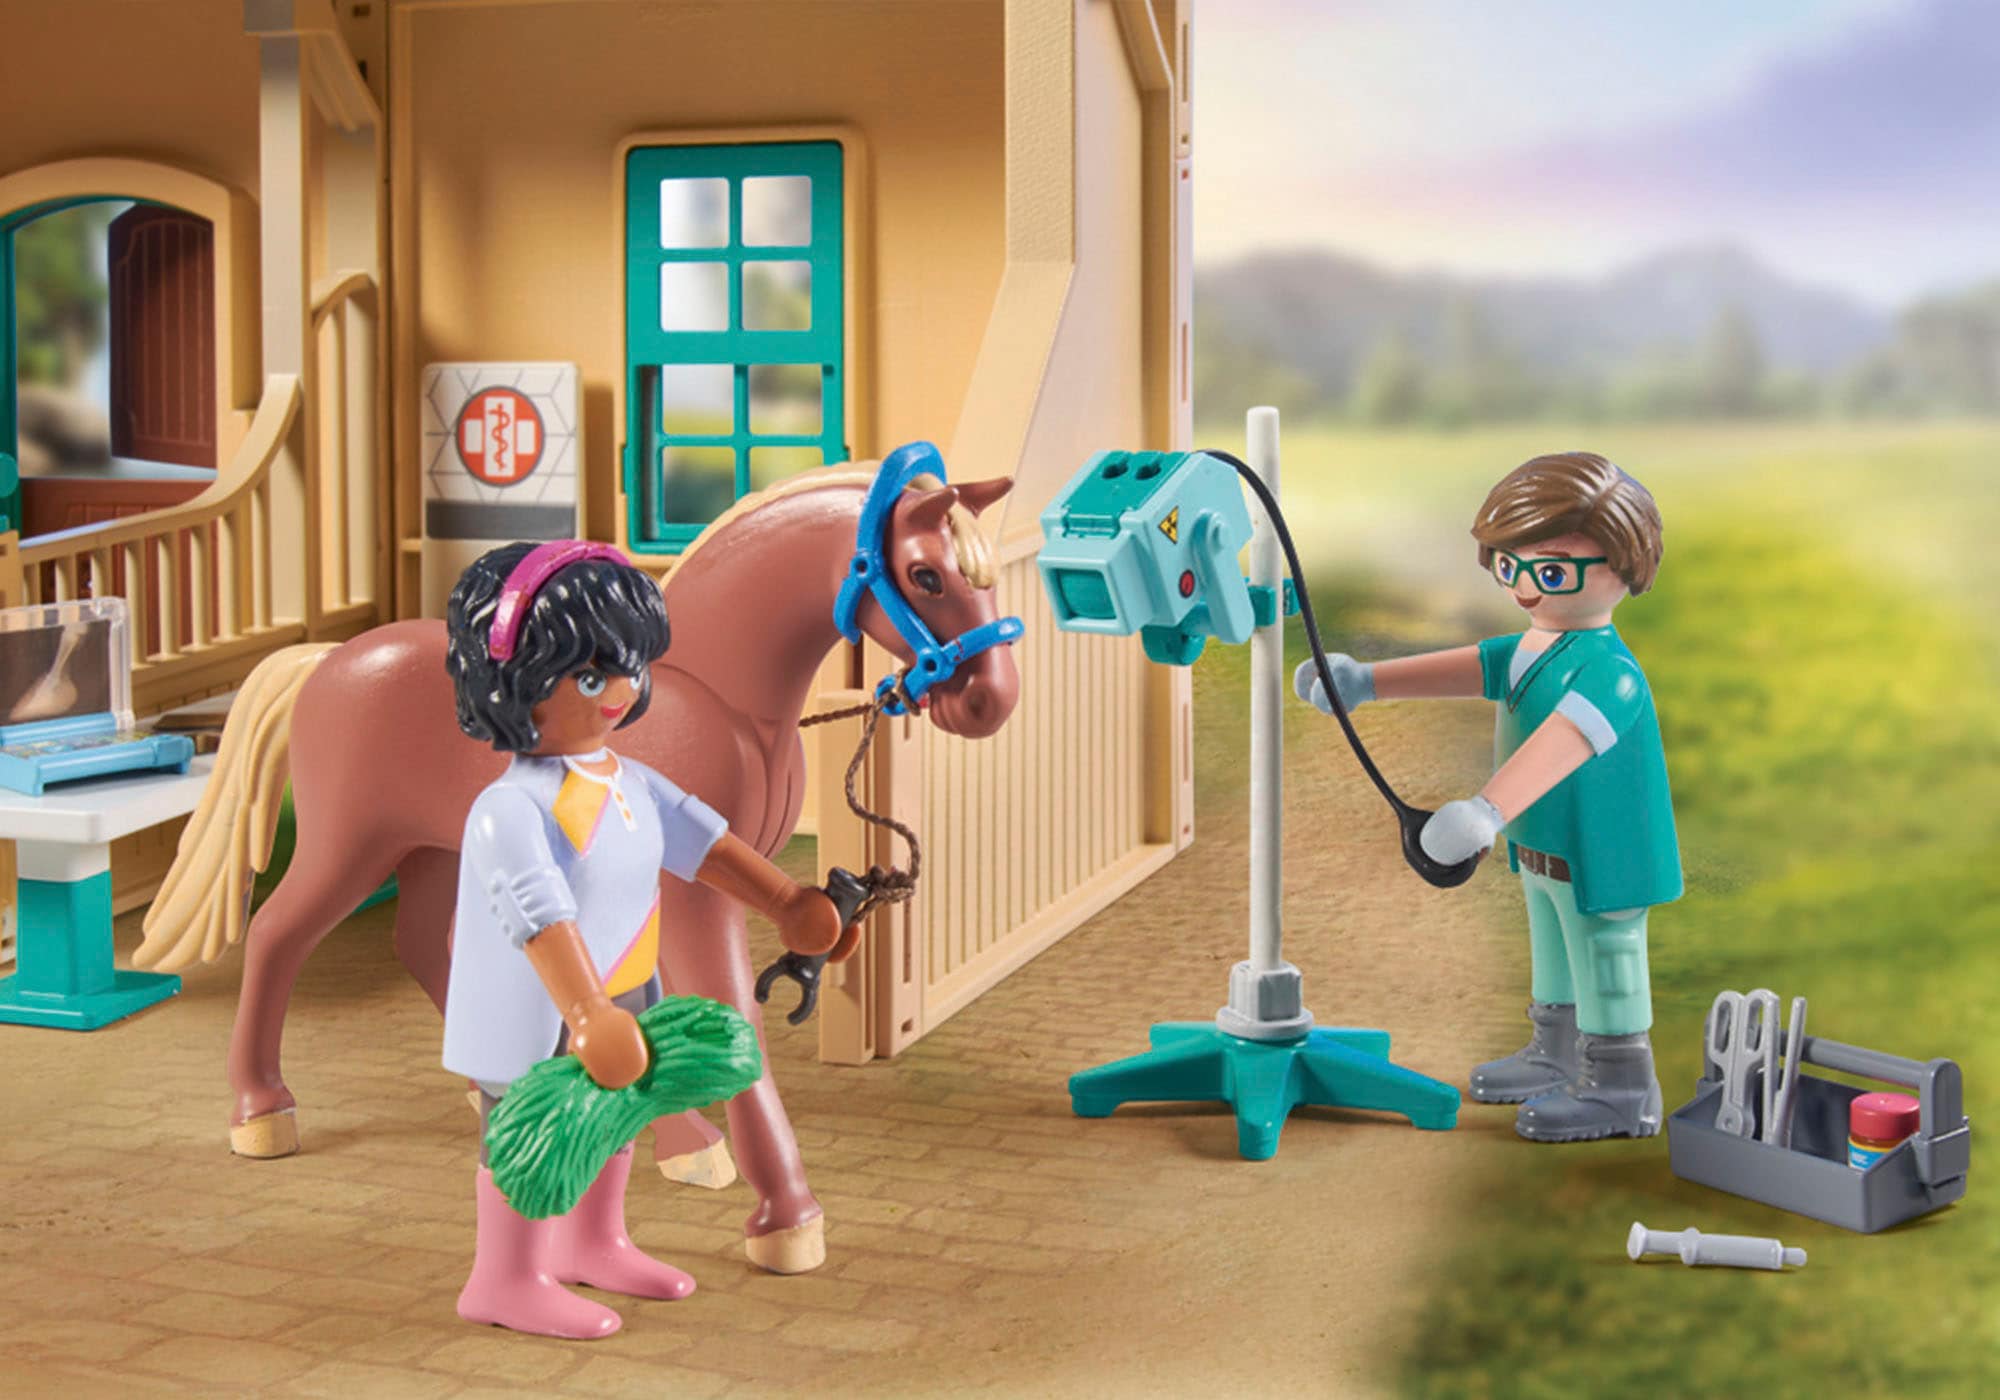 Playmobil® Konstruktions-Spielset »Reittherapie & Tierarztpraxis (71352), Horses of Waterfall«, (164 St.)